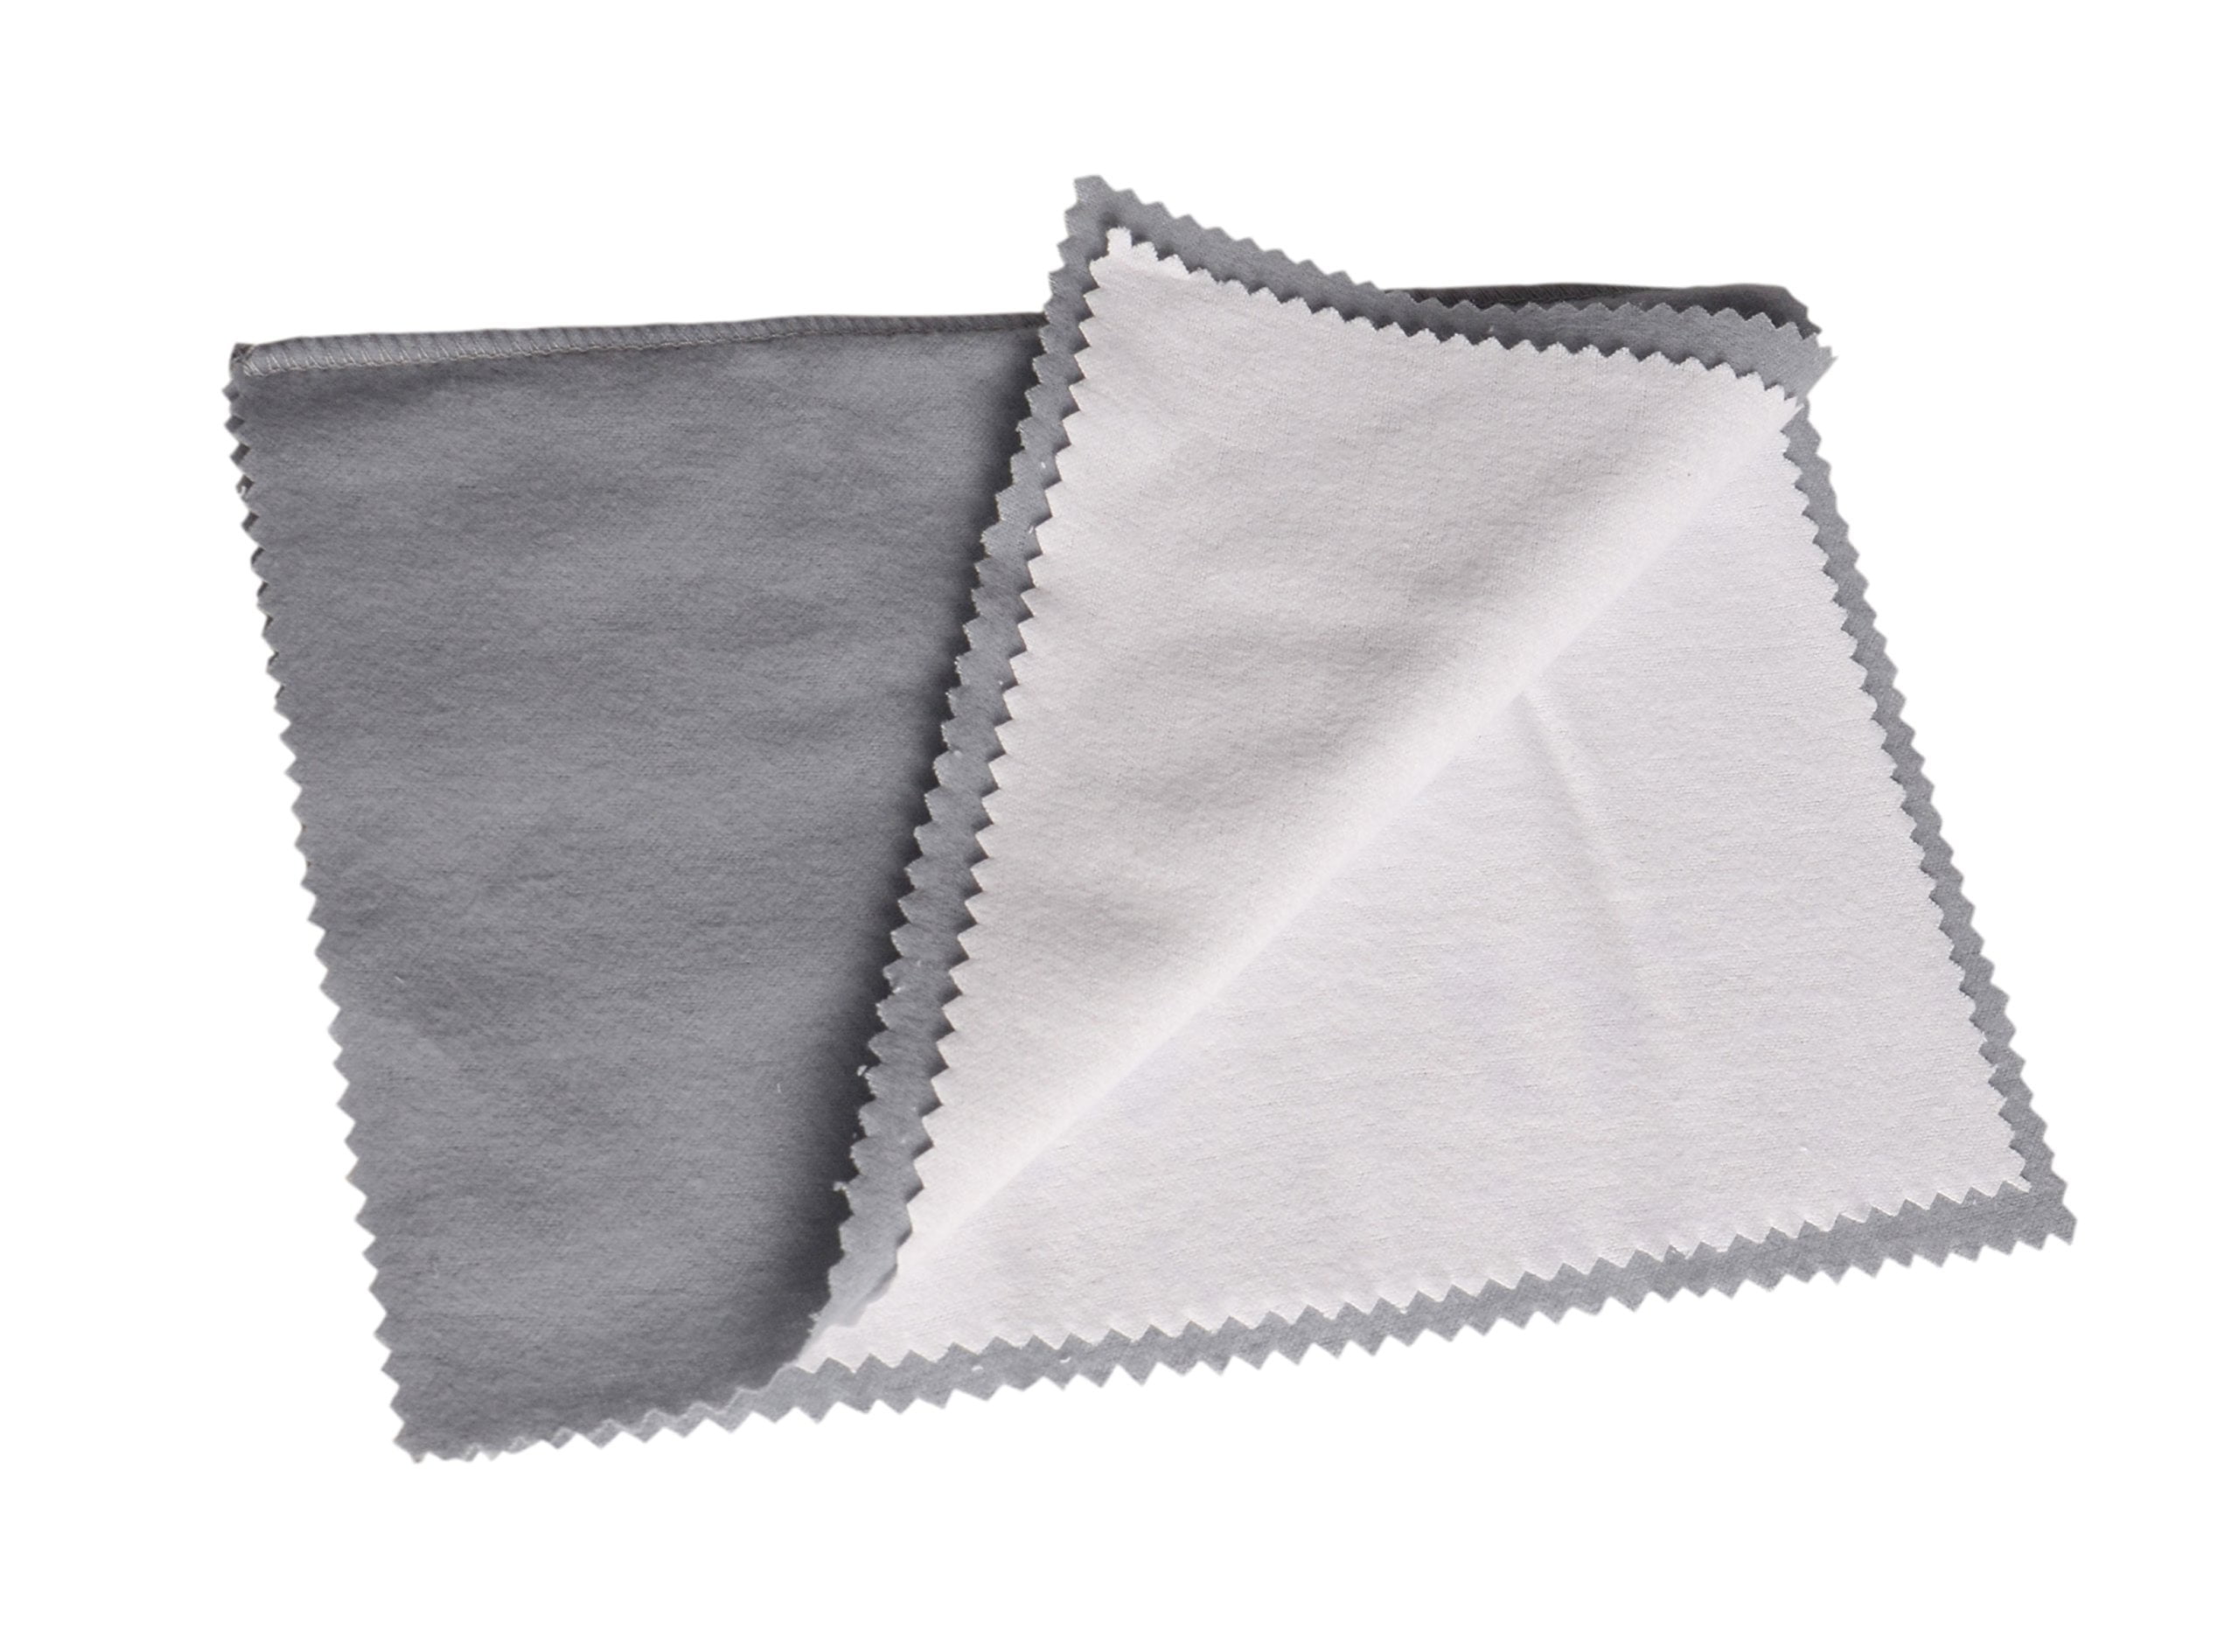 50pcs Silver Polish Cleaner Cloth Handkerchiefs Napkins Wipes for  Silverware Jewelry Tool Equipment Making Supplies Handmade